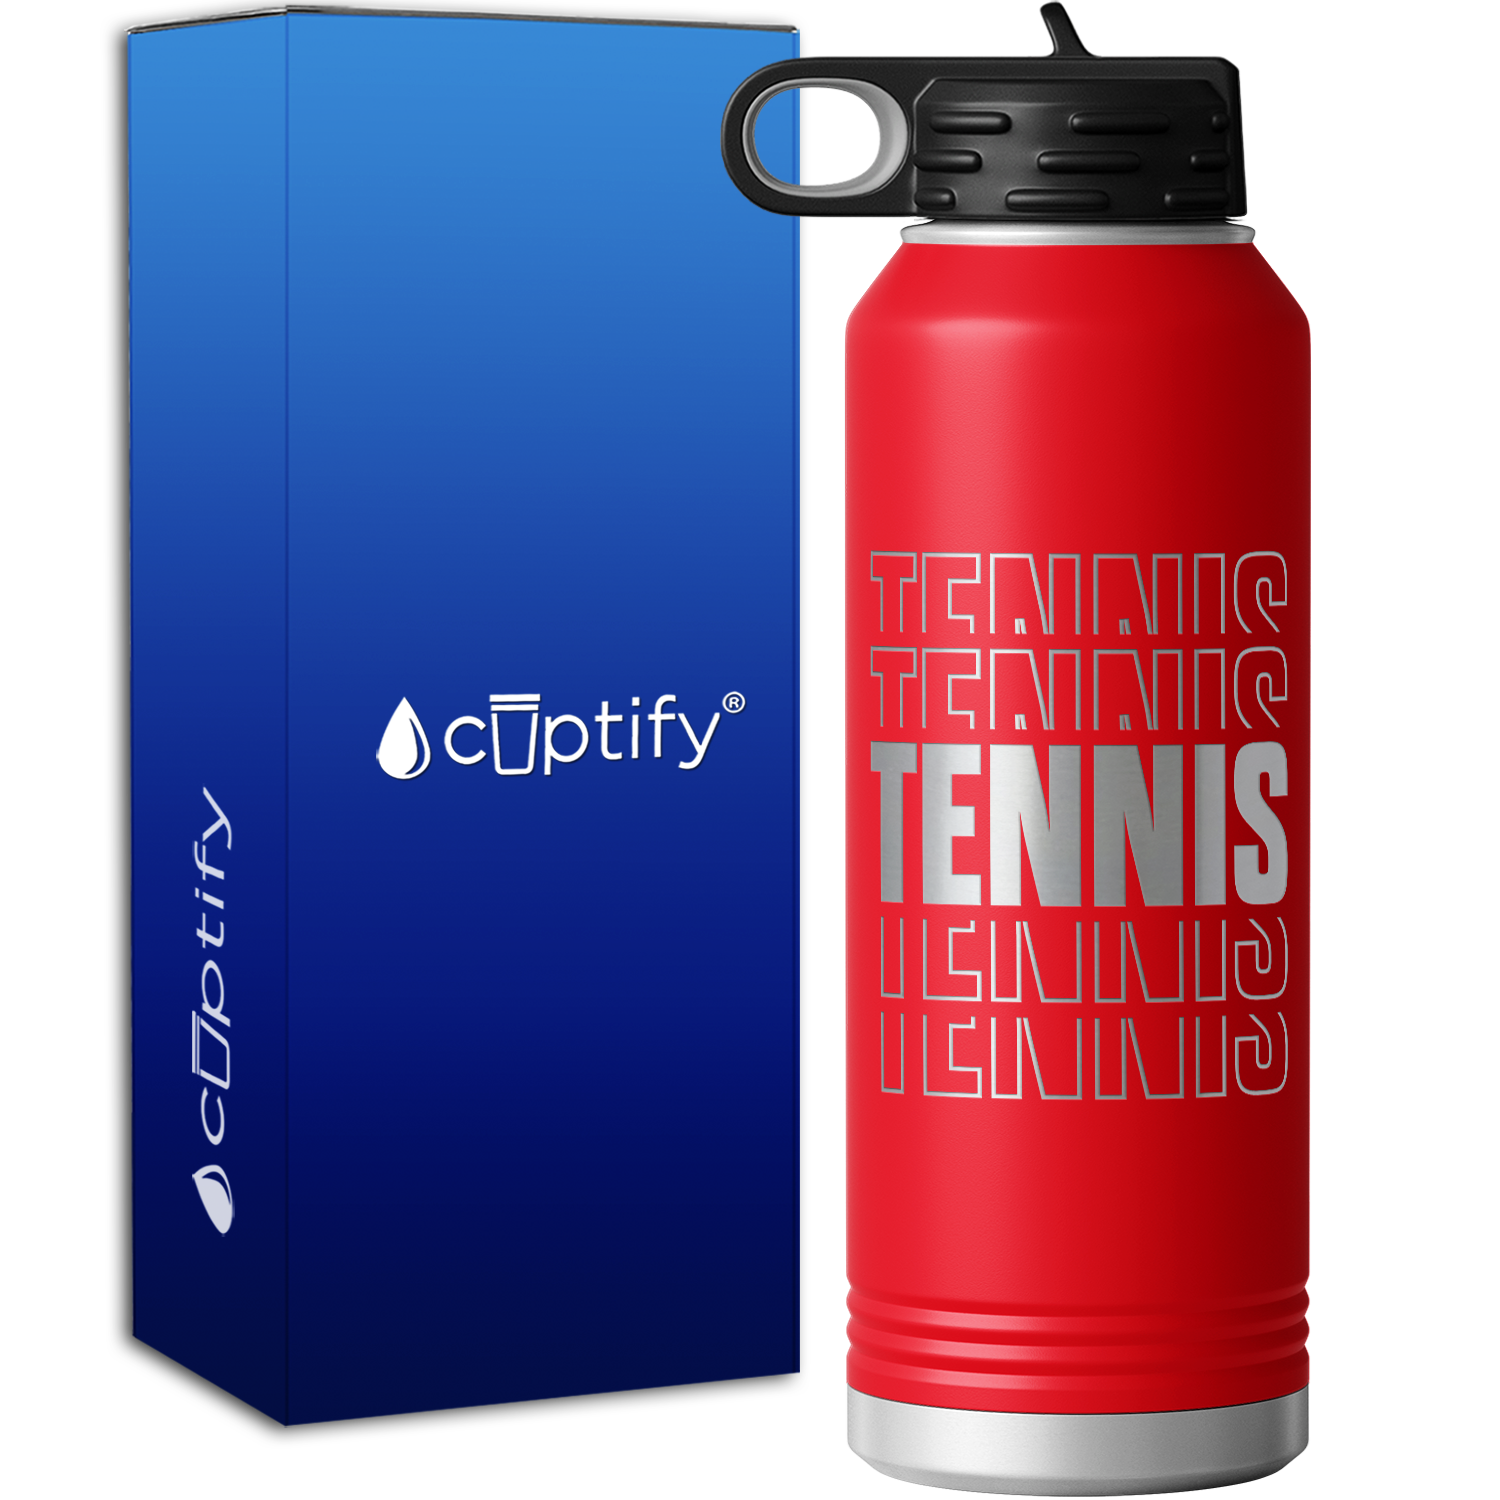 Tennis Tennis Tennis 40oz Sport Water Bottle